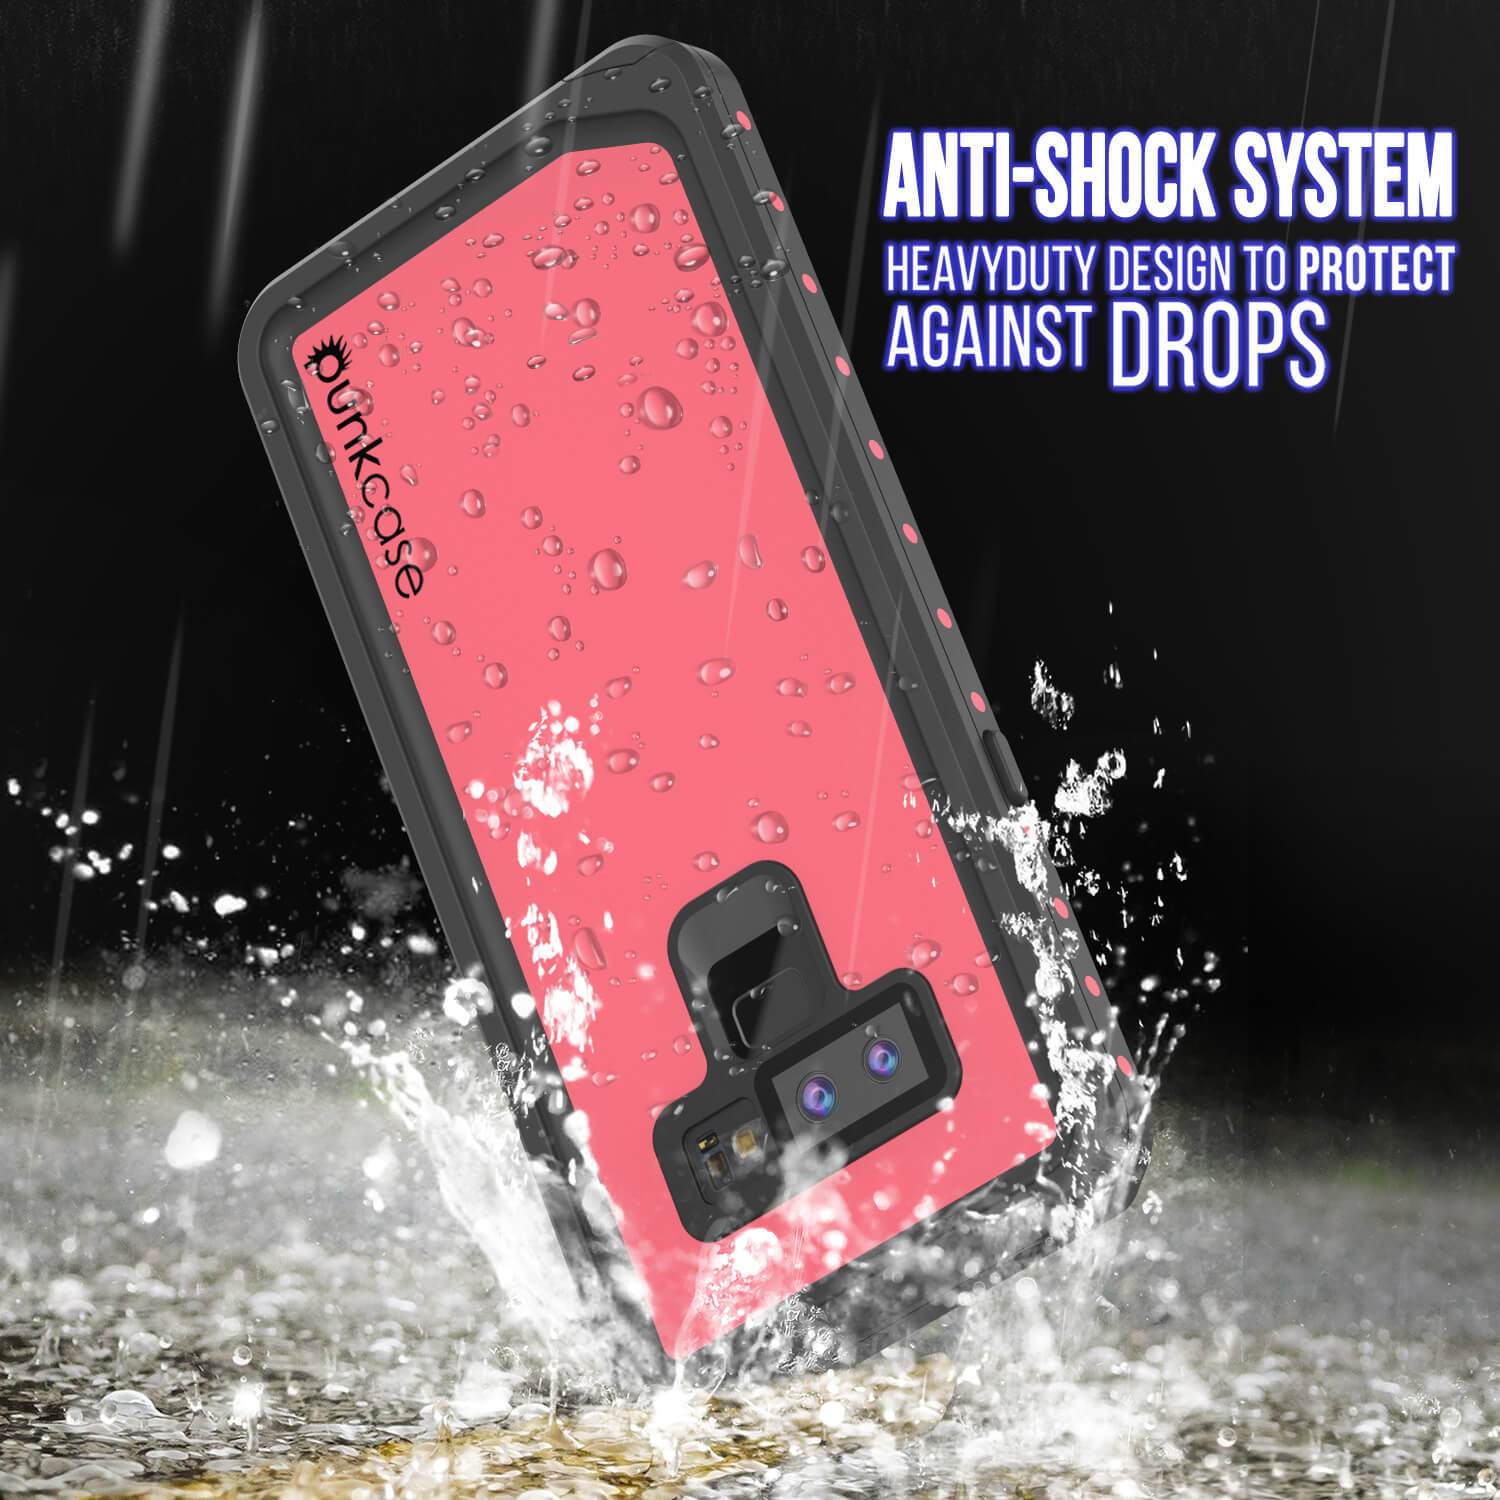 Galaxy Note 9 Waterproof Case PunkCase StudStar Pink Thin 6.6ft Underwater Shock/Snow Proof